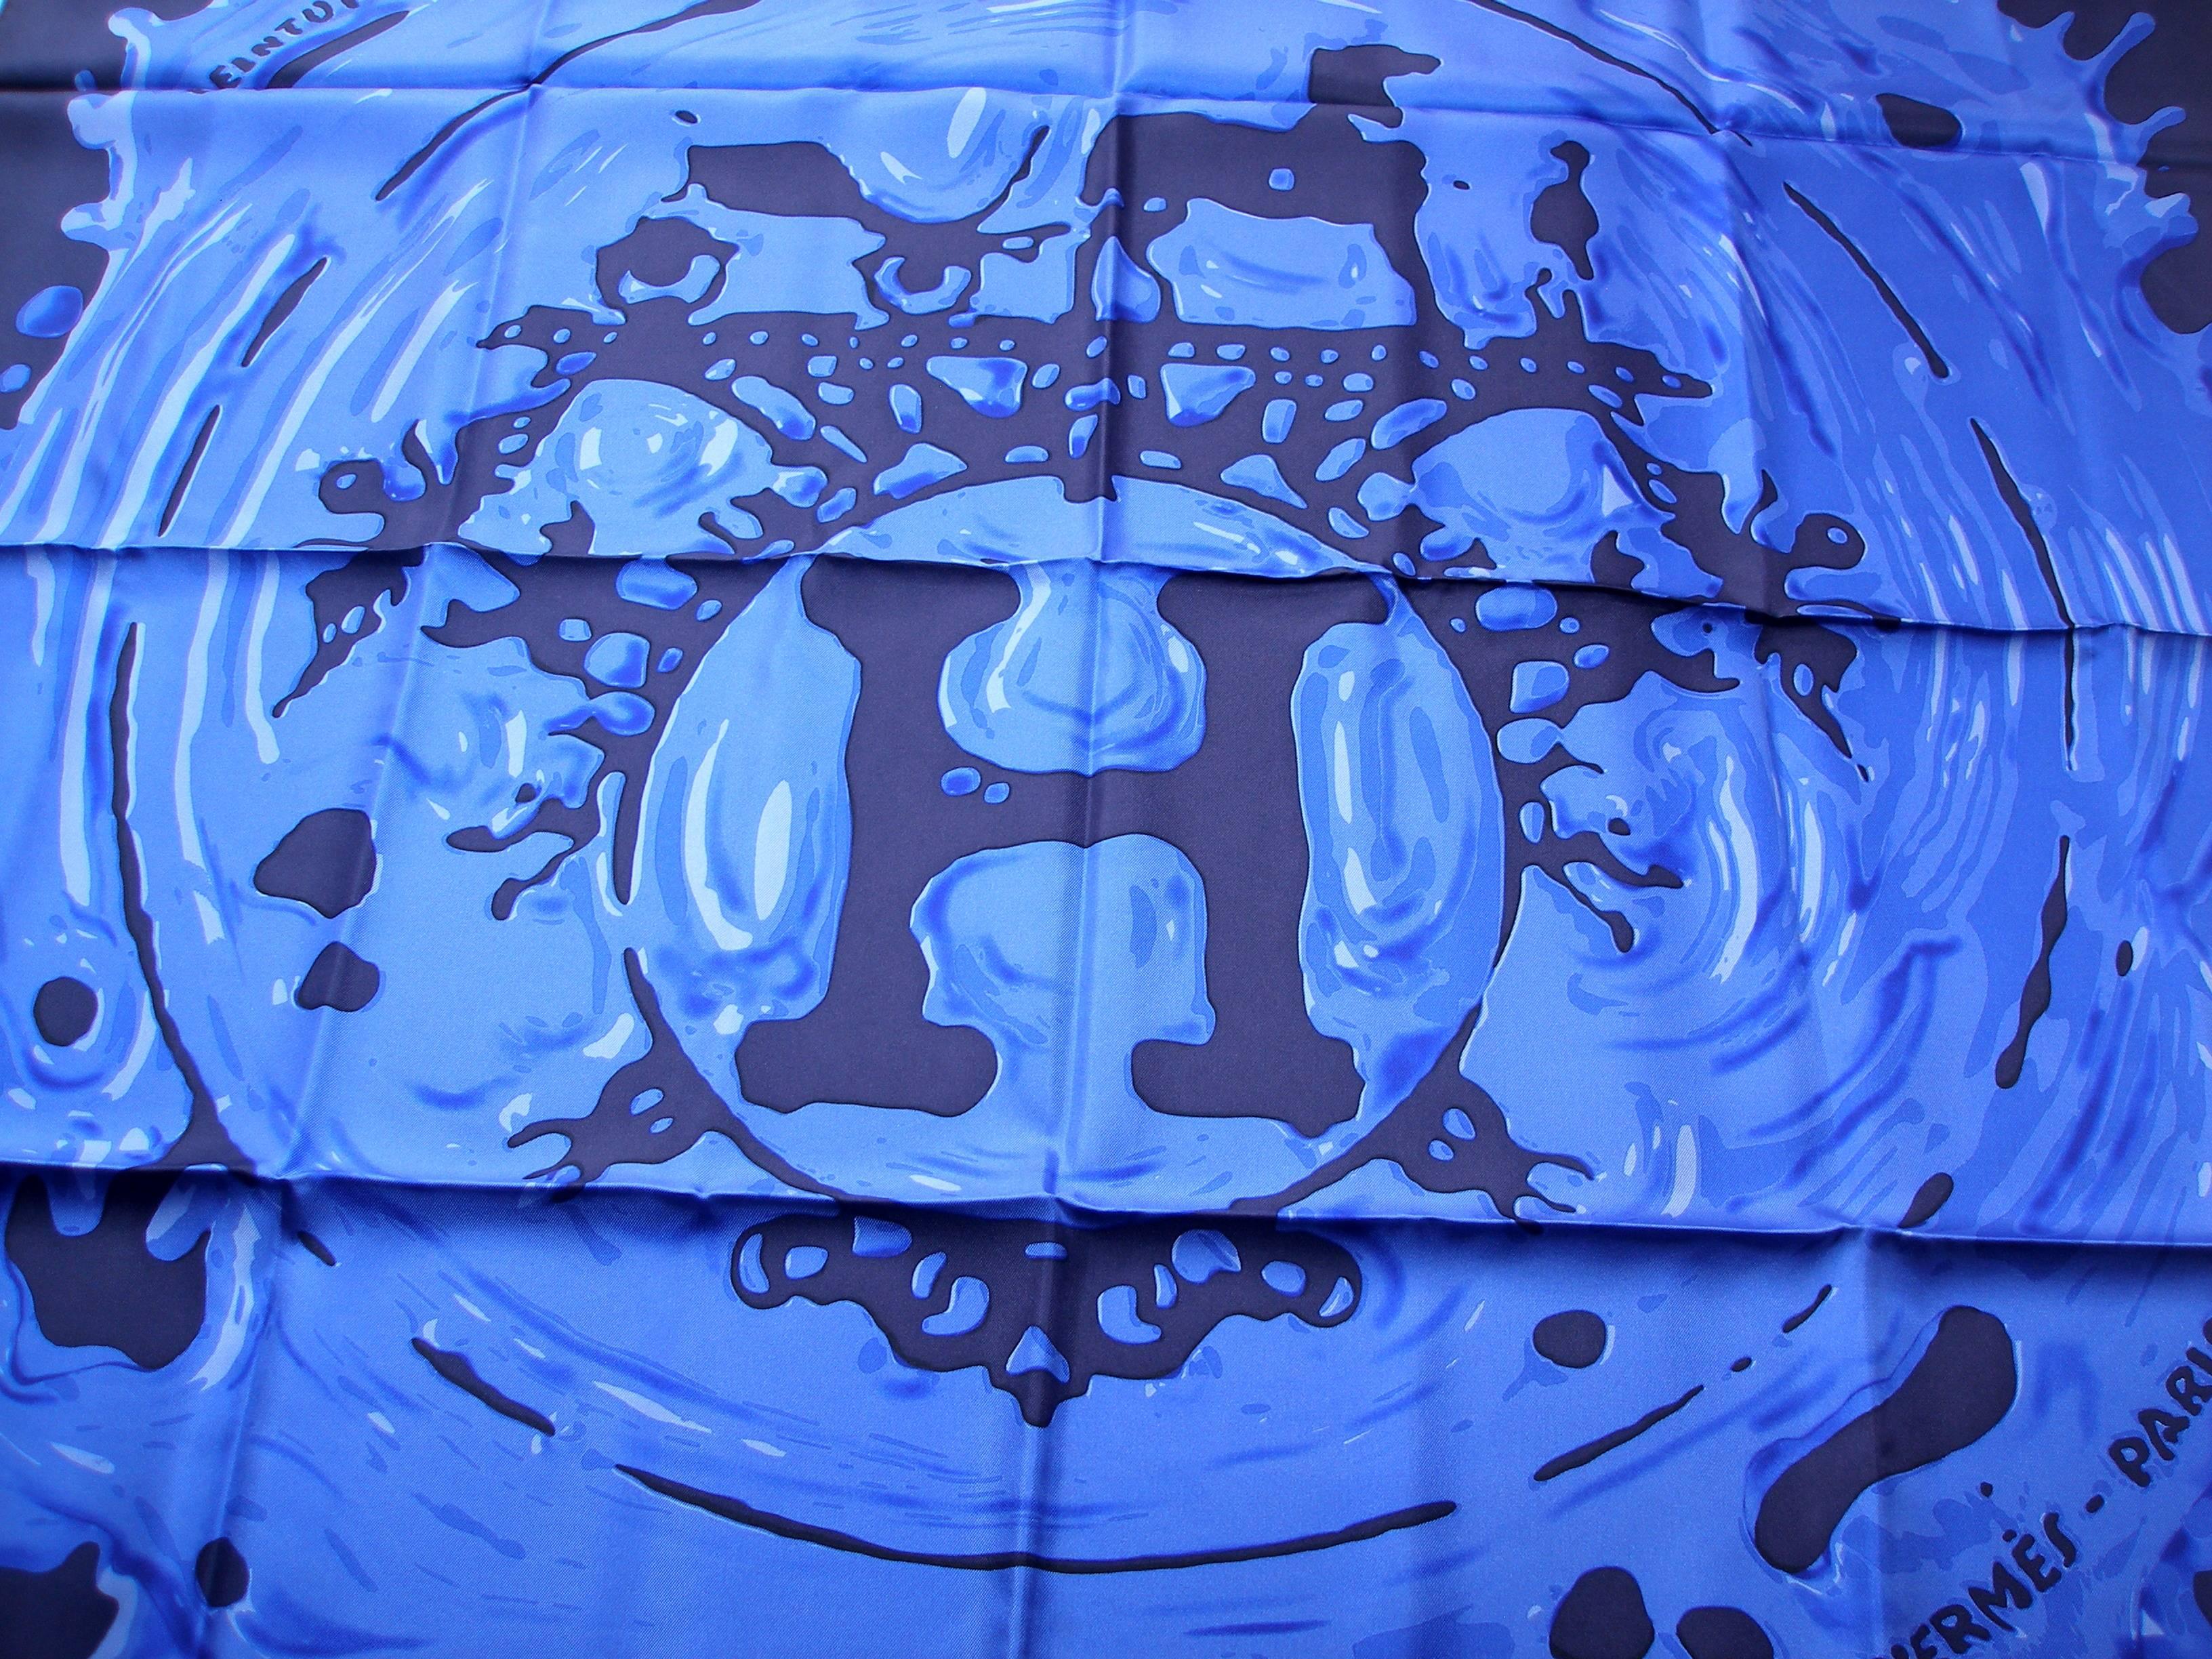 SOLD OUT EVERYWHERE 
Rare Hermès Scarf Peinture Fraiche
Color : bleu / bleu nuit 
Size : 90 cm 
Care tag intact
Its comes with Hermès shopping bag 
